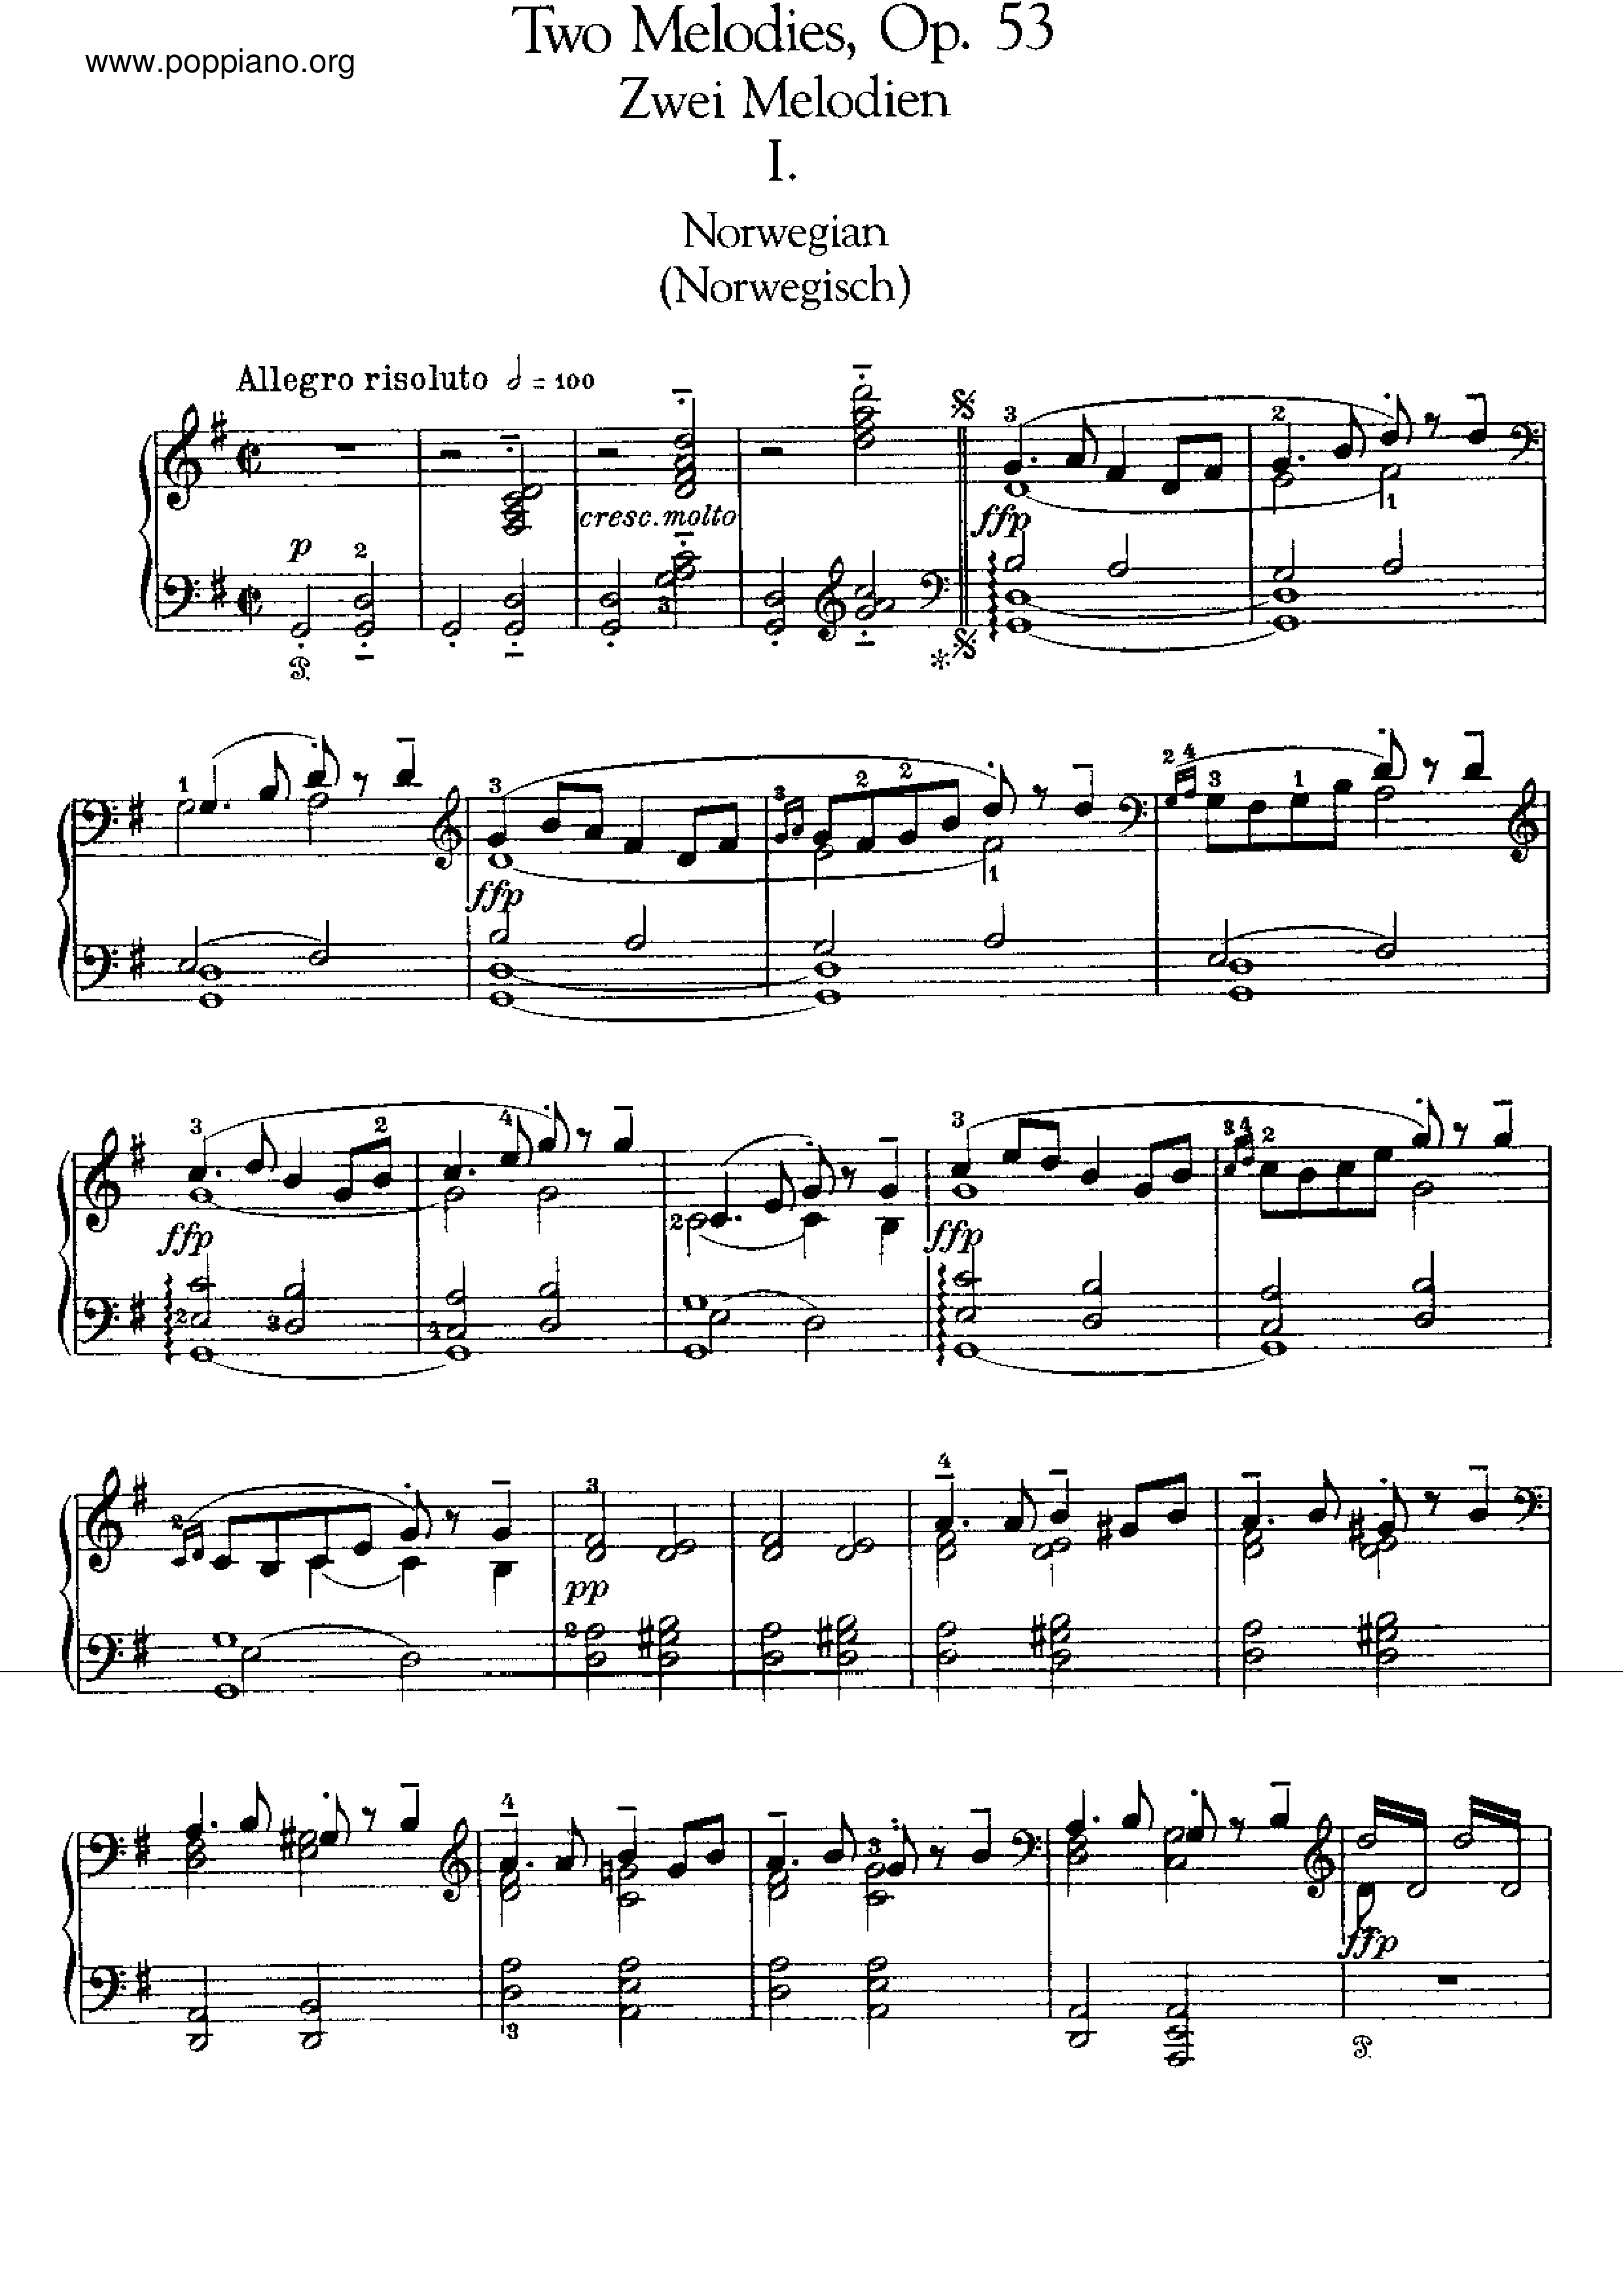 2 Melodies, Op.53 Score